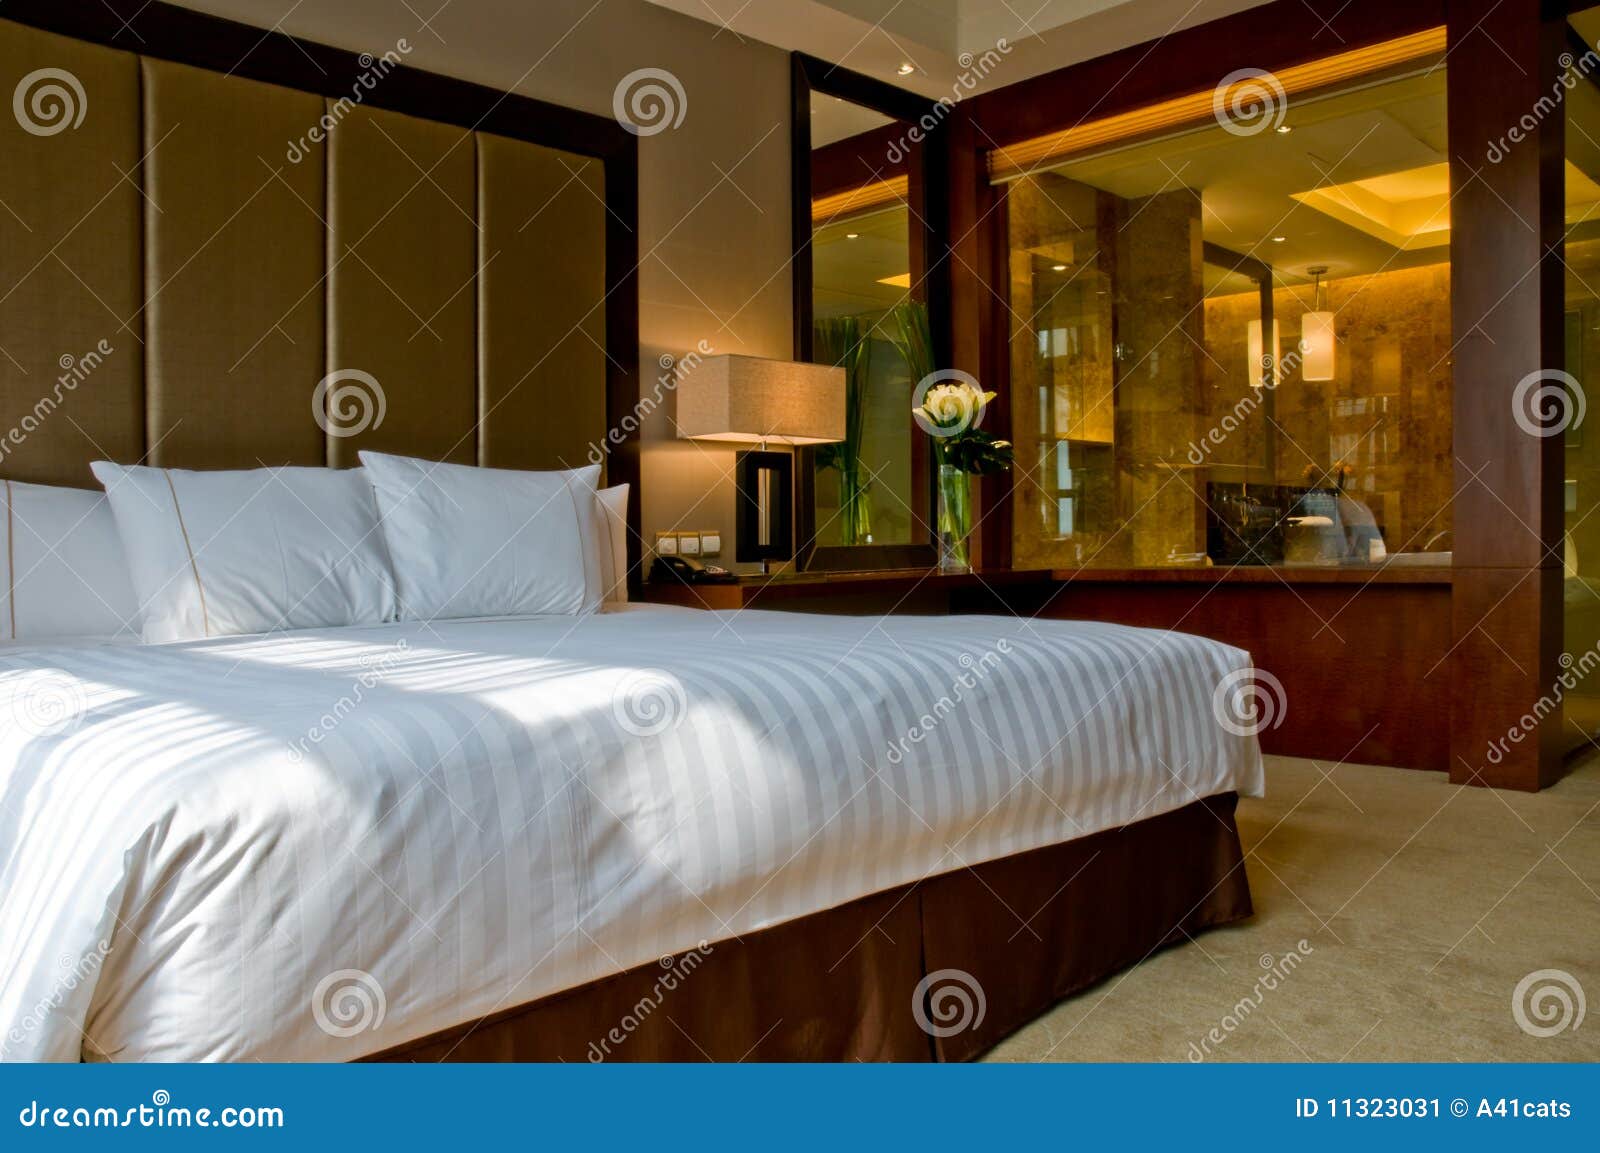 king bed marble bathroom five star hotel suite